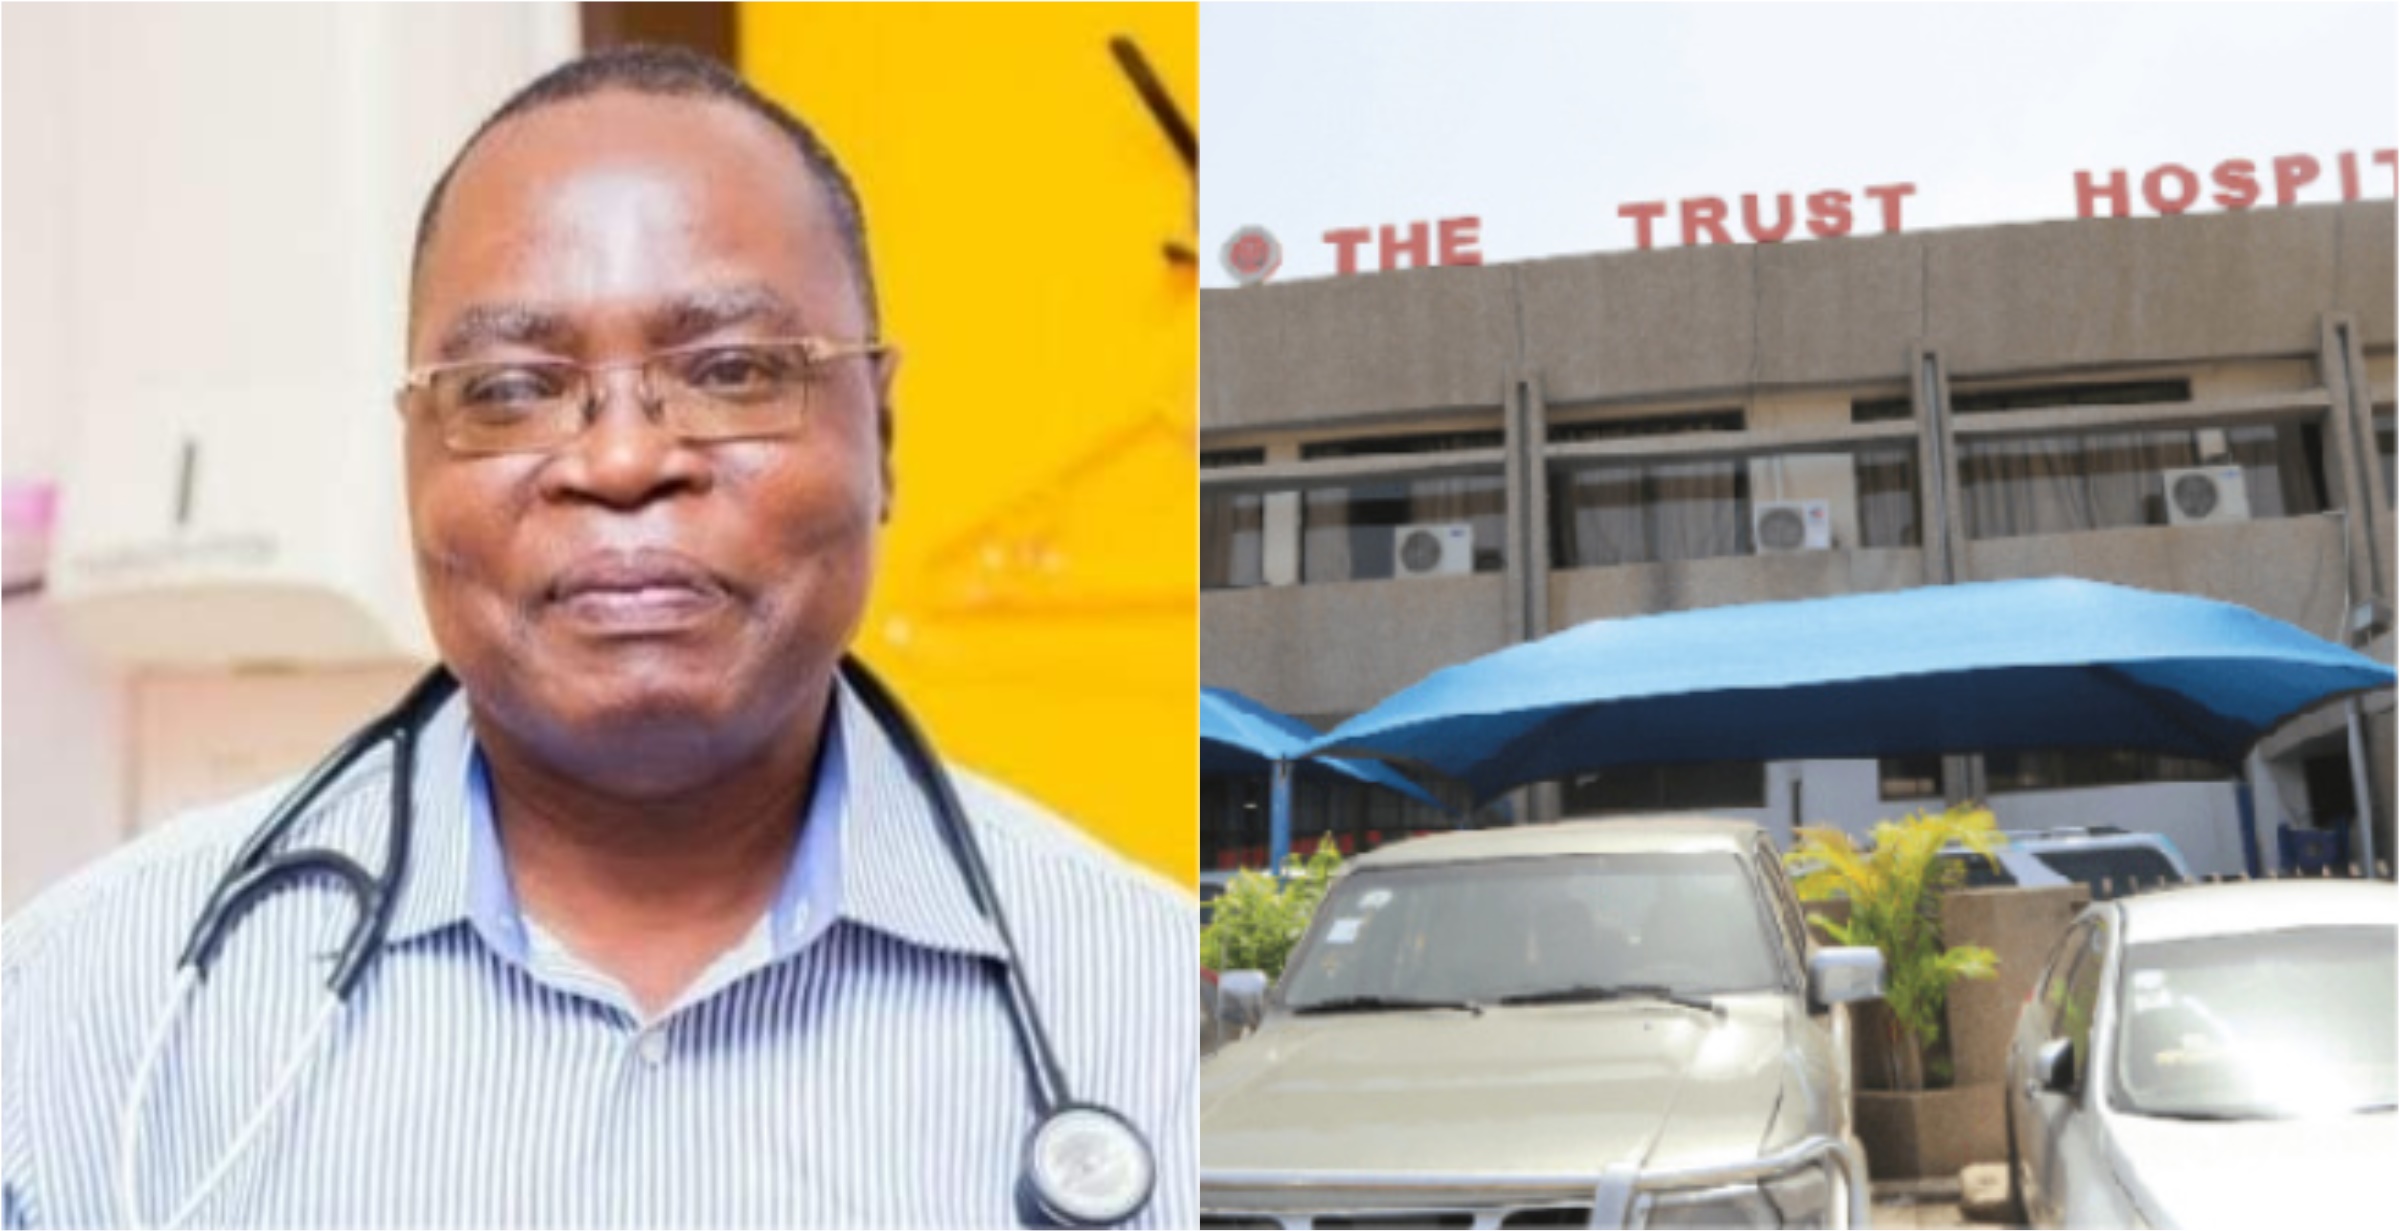 Confirmed: Renowned surgeon at Trust Hospital Dr. Kisser dies of coronavirus